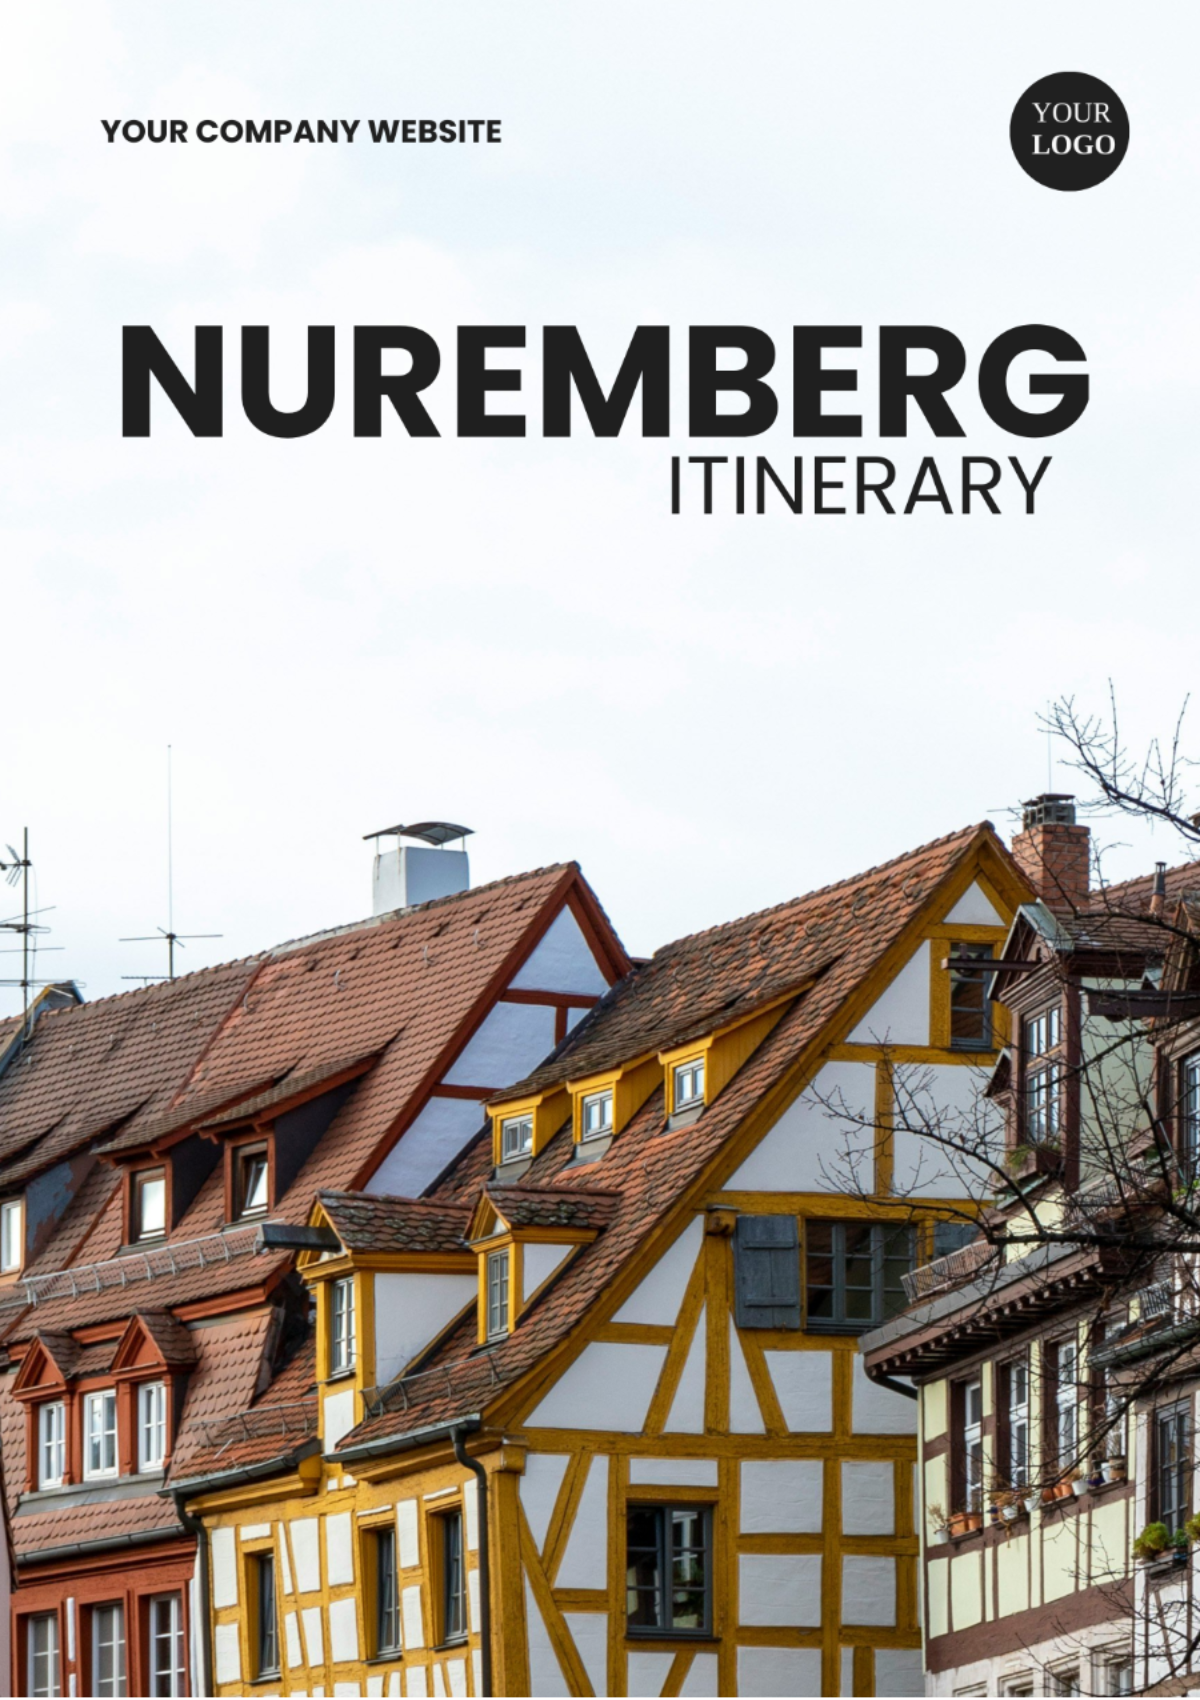 Nuremberg Itinerary Template